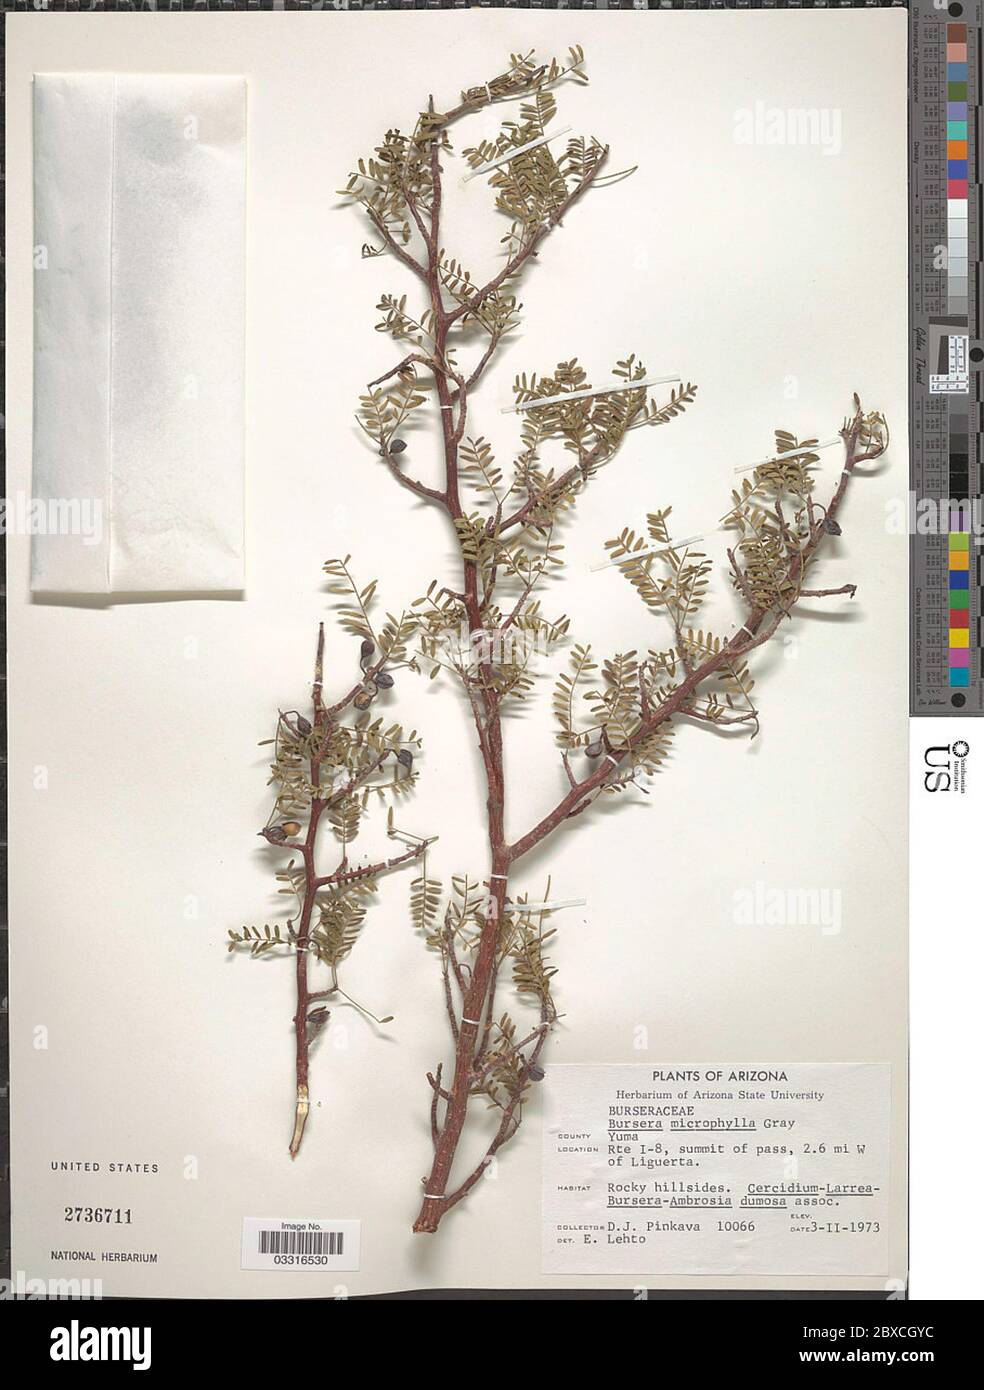 Bursera microphylla A Gray Bursera microphylla A Gray. Stock Photo